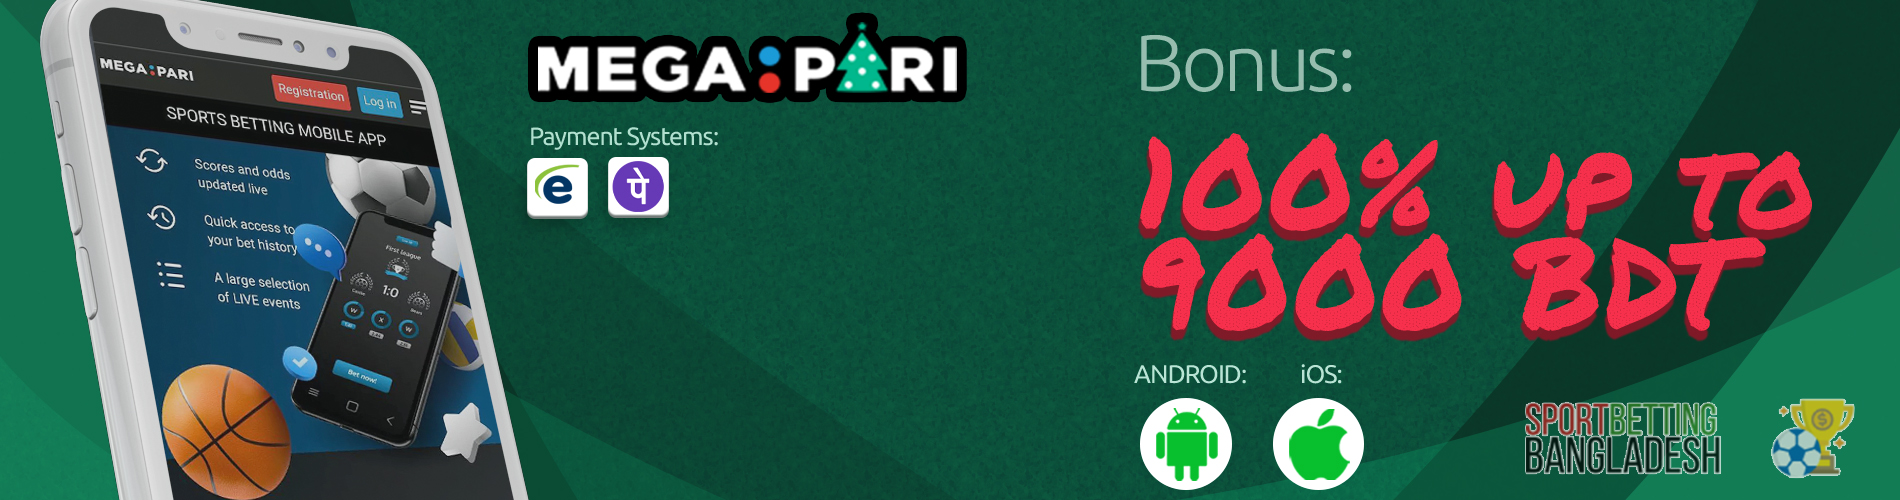 Megapari Bangladesh app: payment systems, available platforms, welcome bonus.